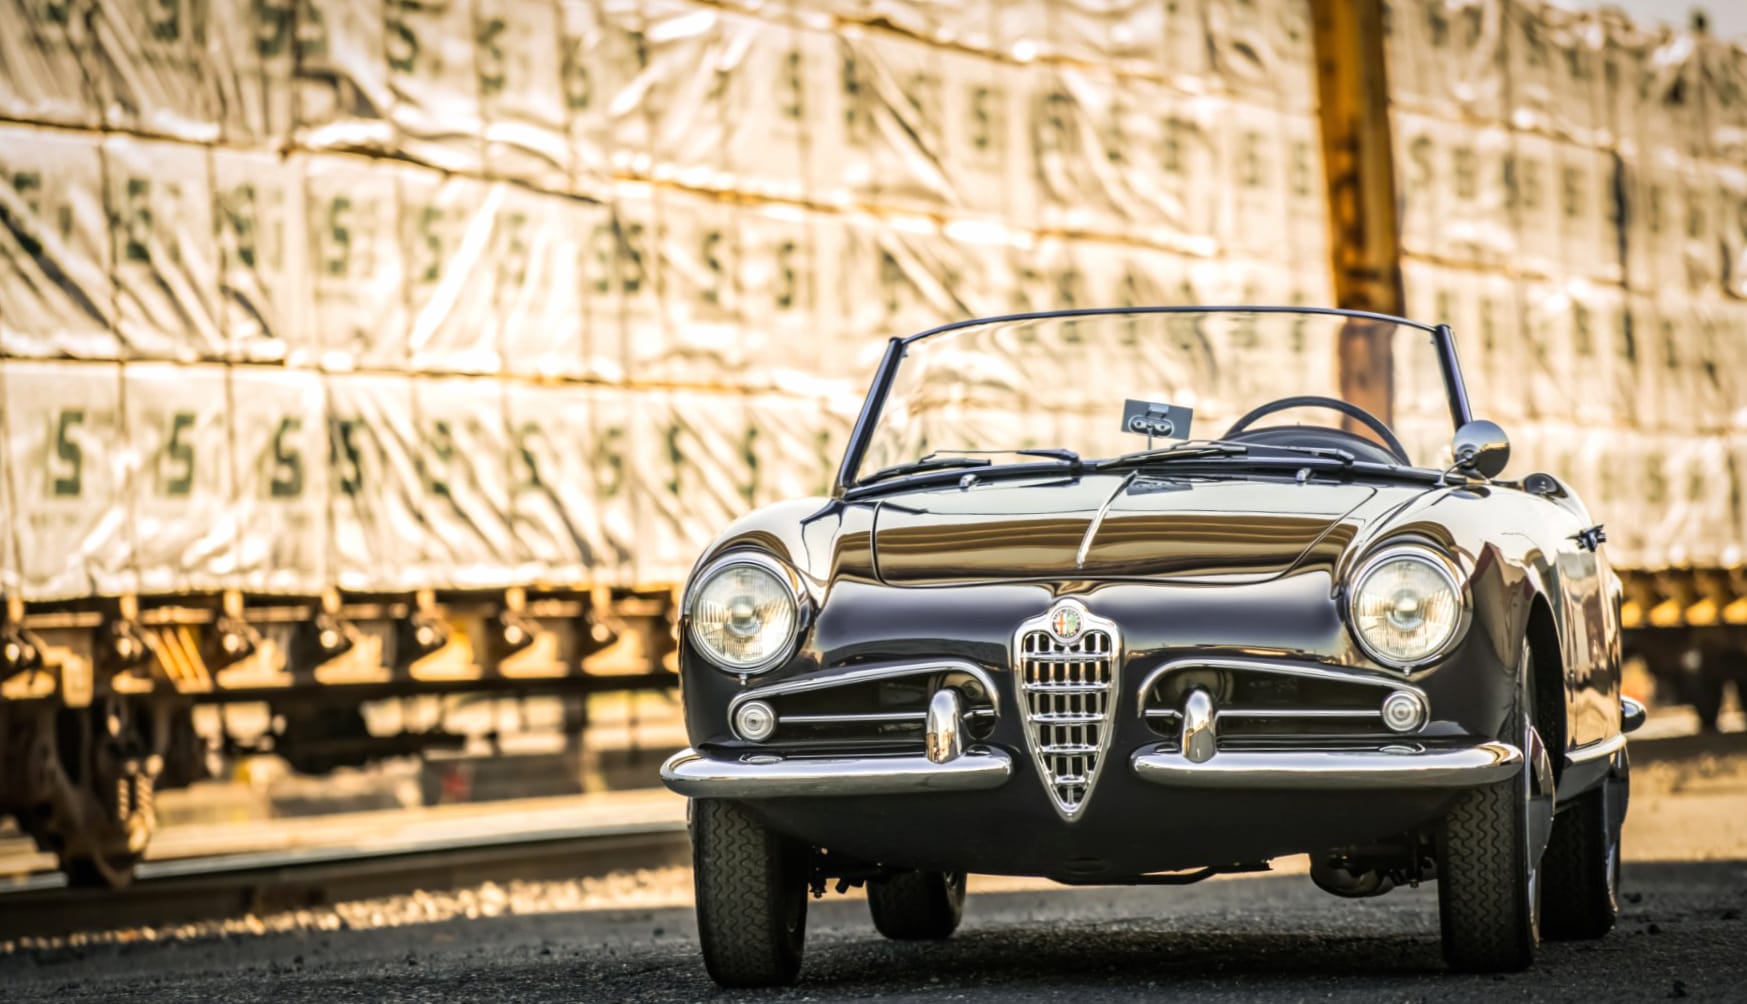 Alfa Romeo Giulietta Spider at 1600 x 1200 size wallpapers HD quality